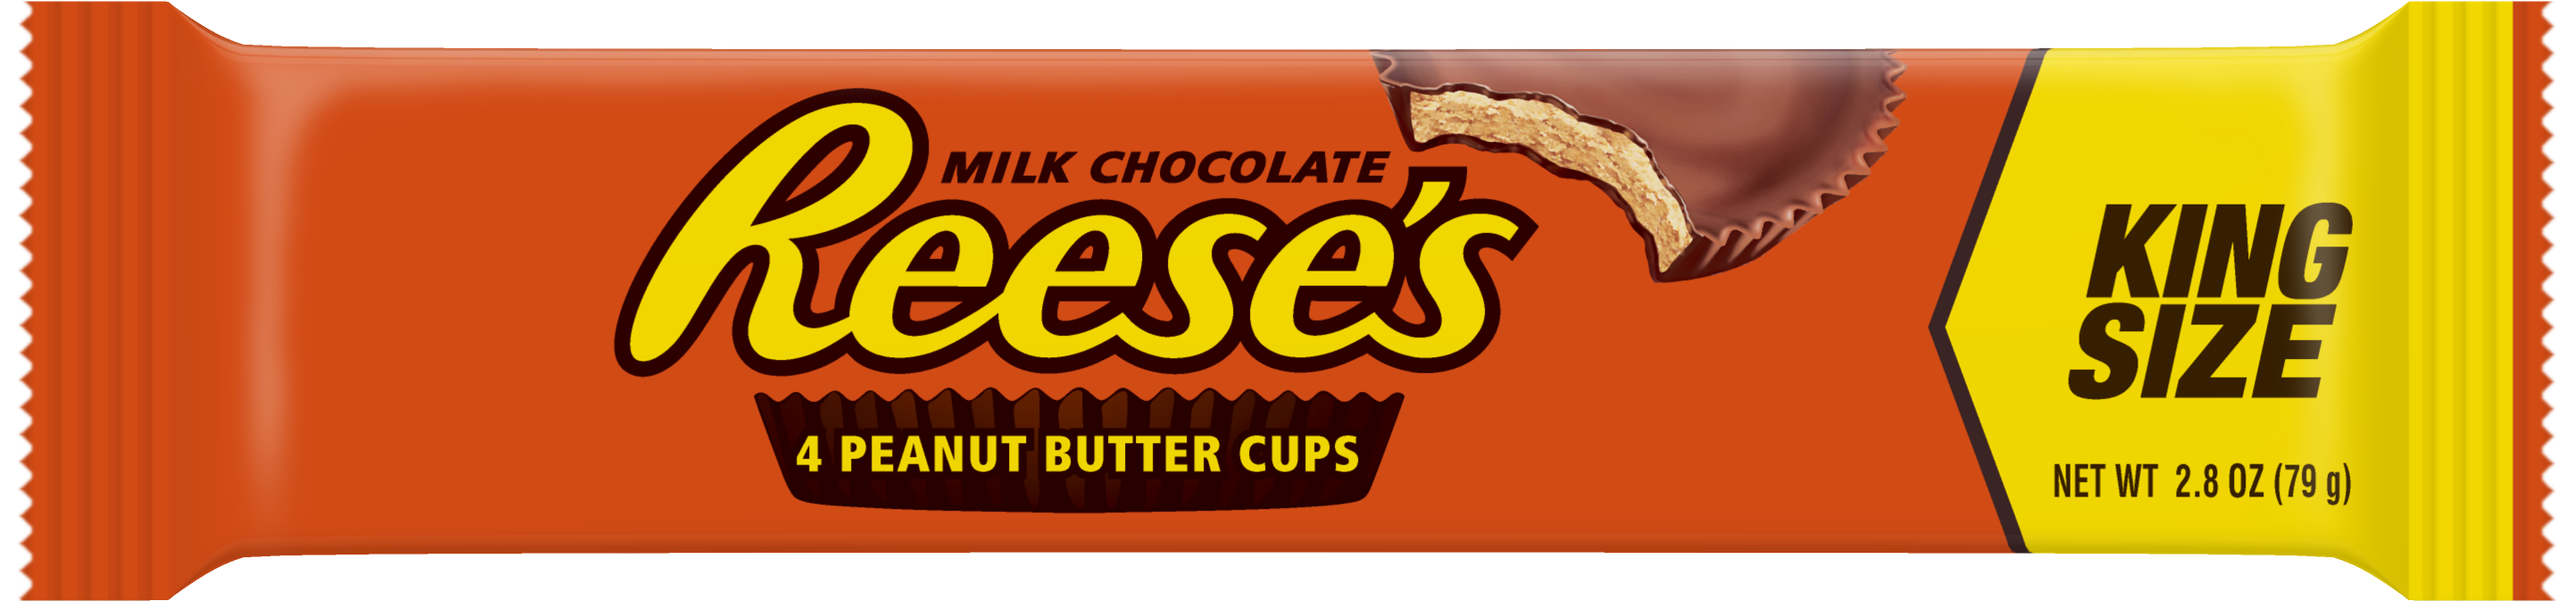 Конфеты Reese's. Reese s арахисовая паста в Молочном шоколаде. Конфеты с арахисовой пастой Reeses. Reese's Peanut Butter Cups. Butter cups